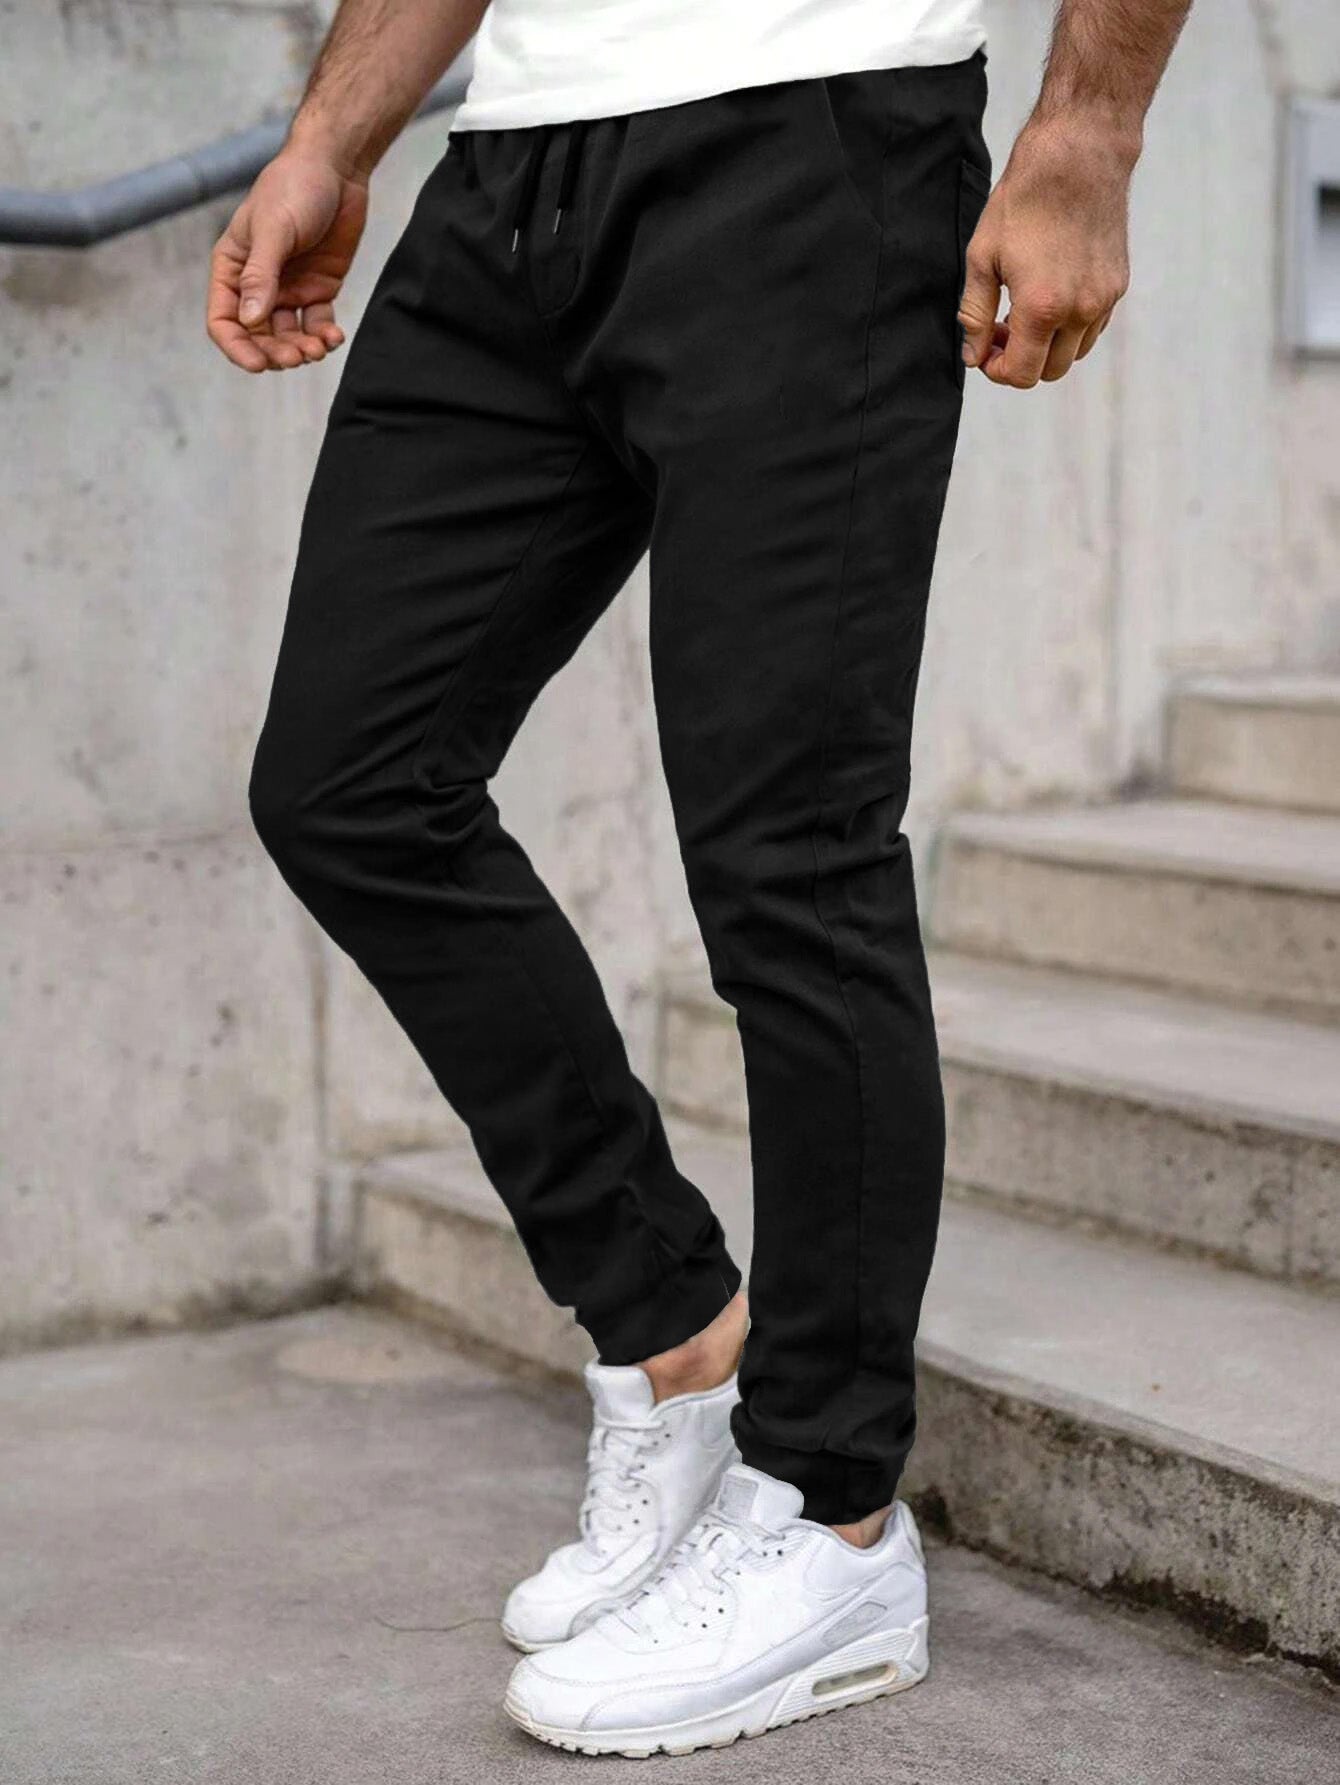 Men Summer Trouser In Pakistan - BrandsEgo